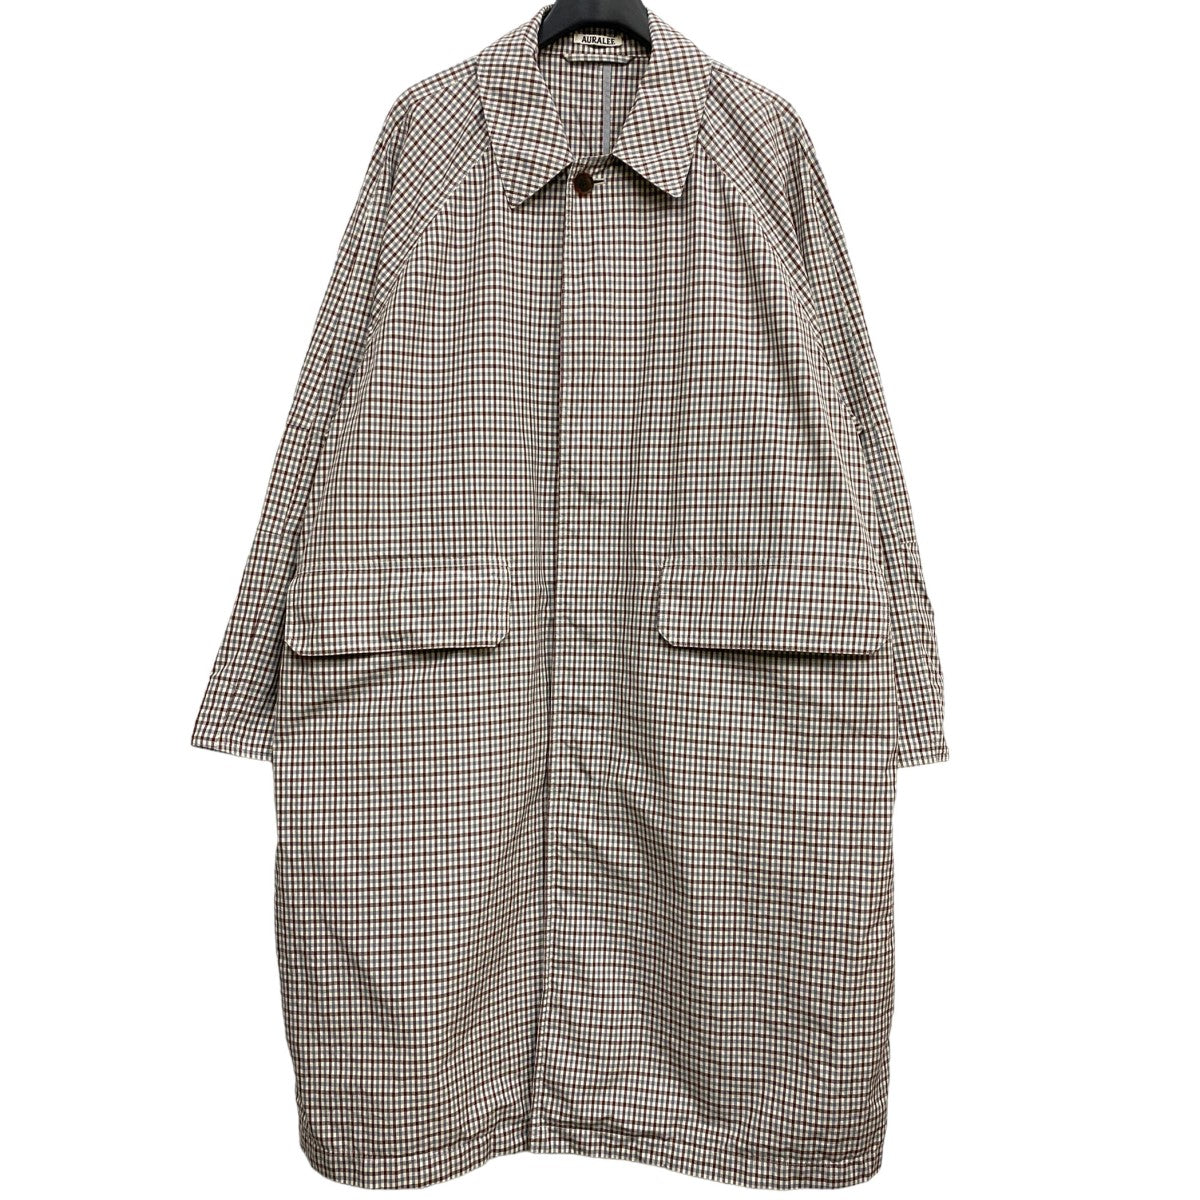 AURALEE(オーラリー) FINX WEATHER CLOTH CHECK COAT防水ウェザー 